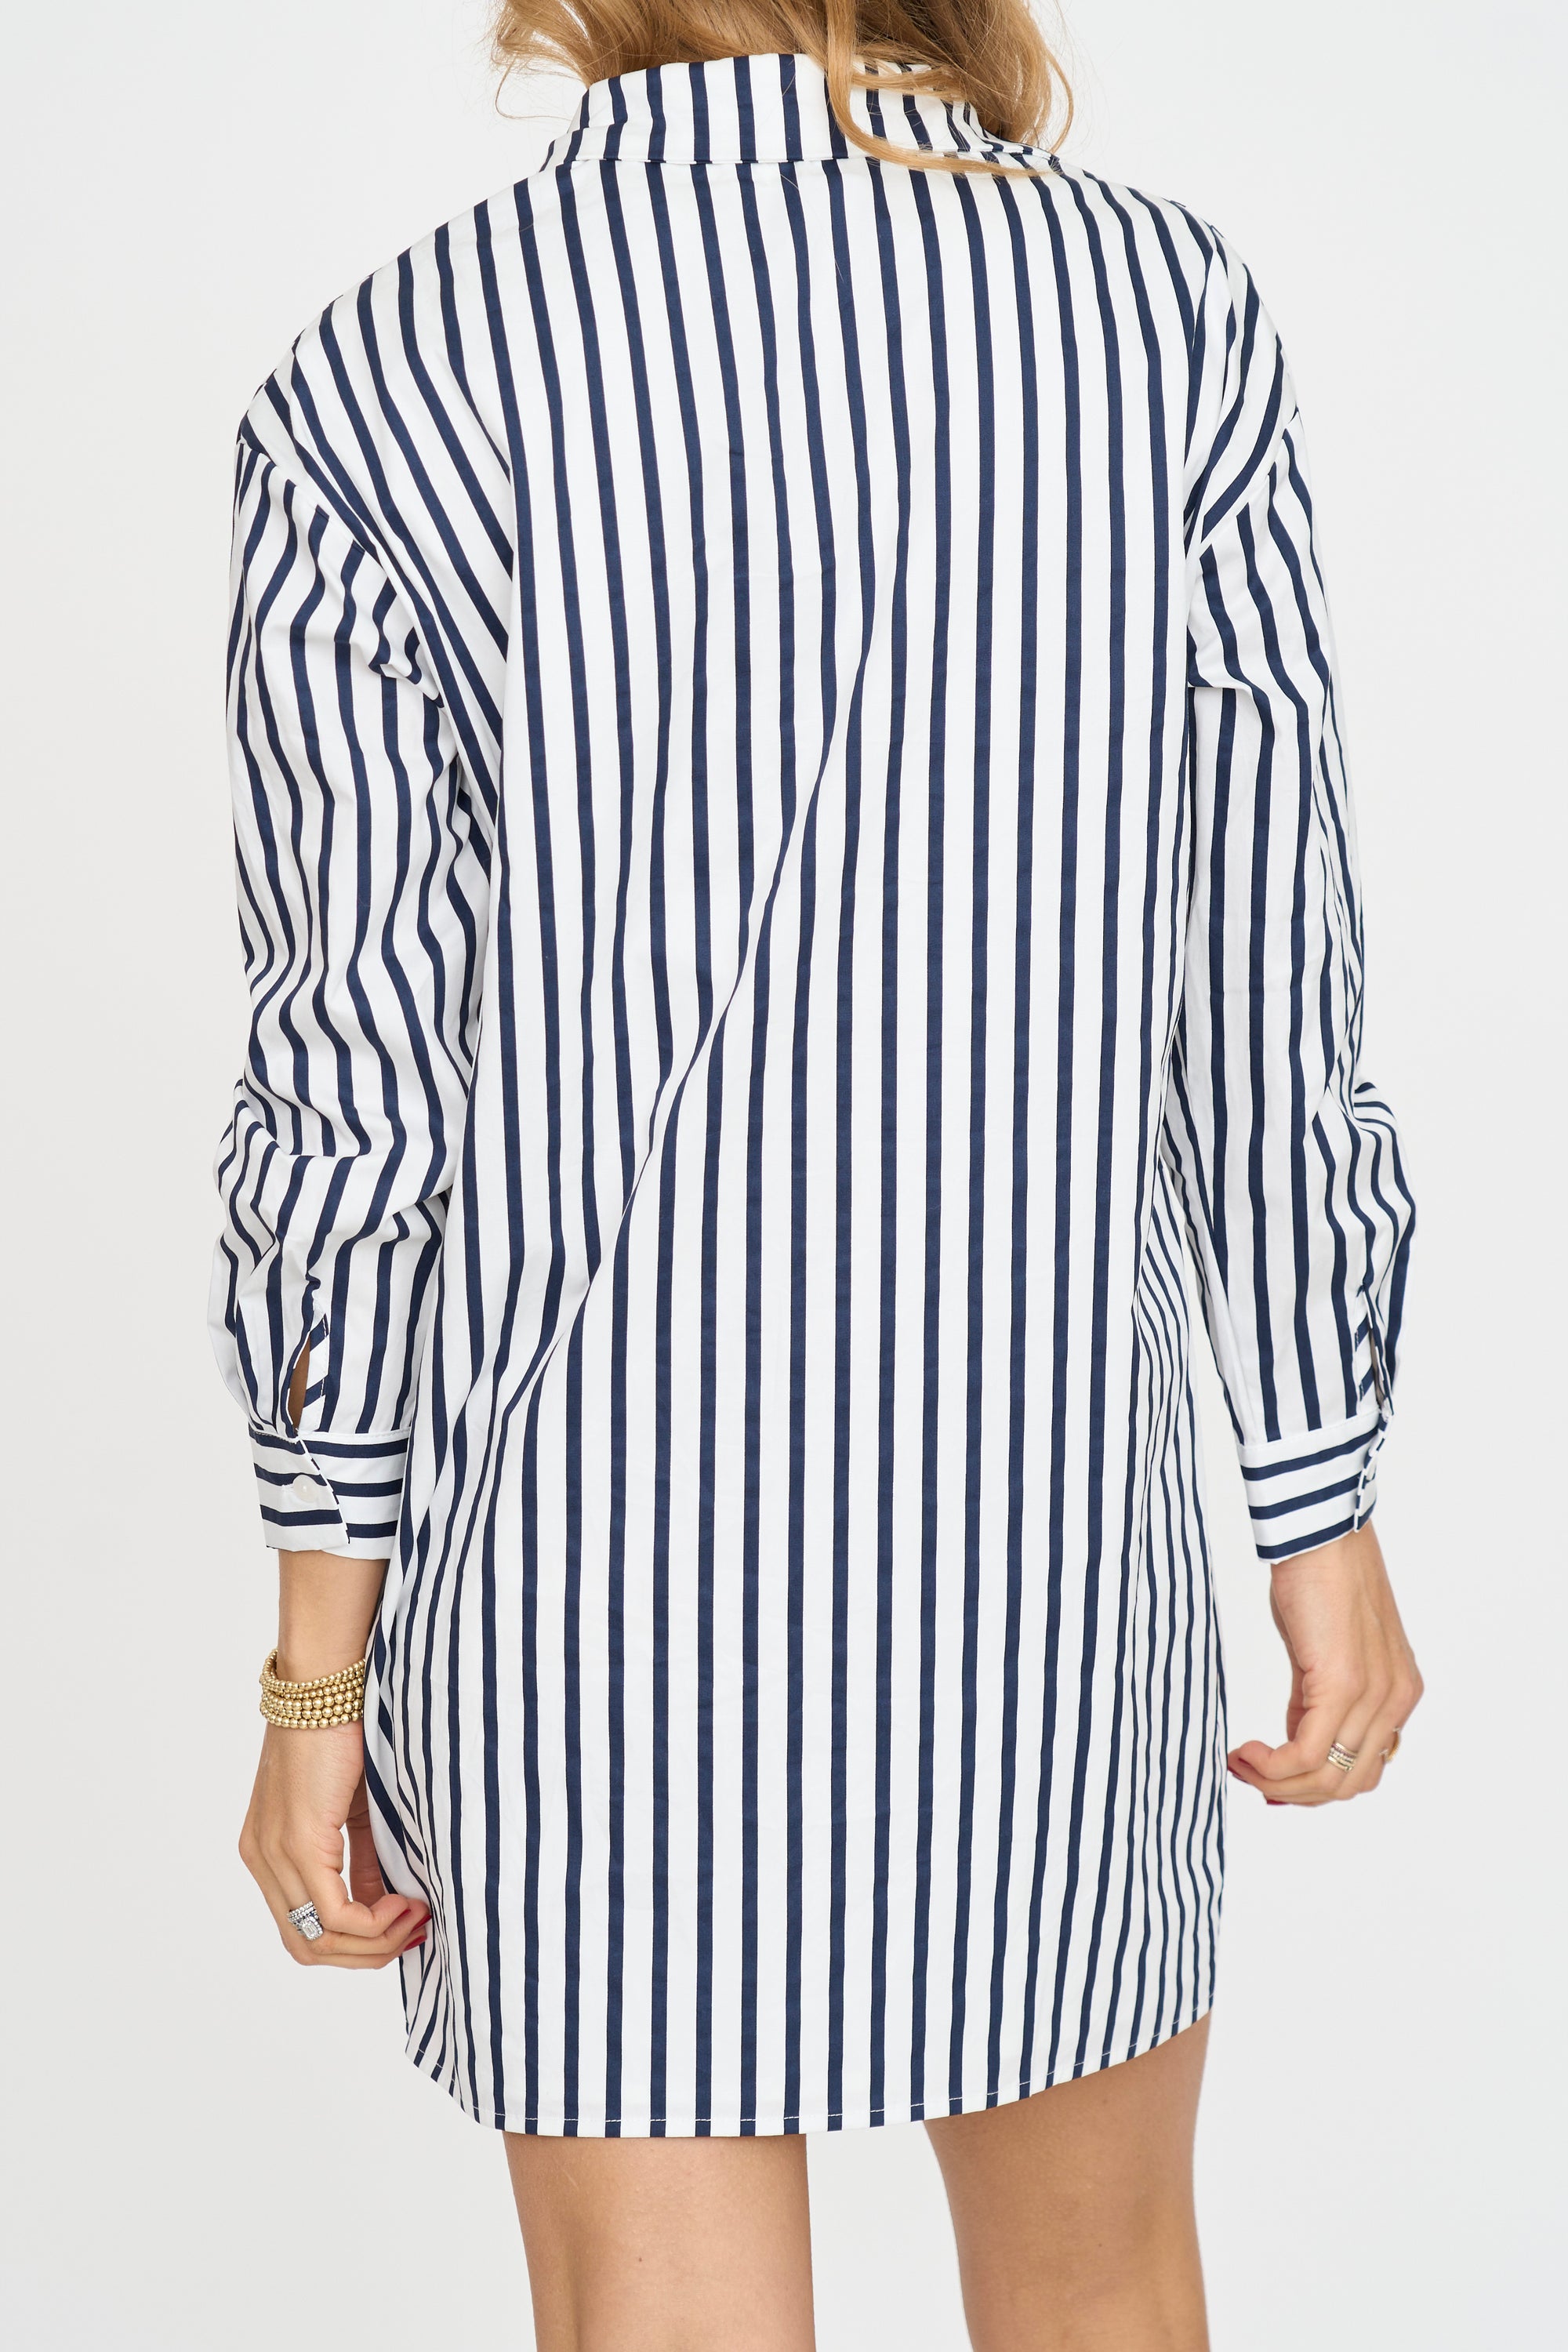 Pin Stripe Shirt Dress in White/Navy